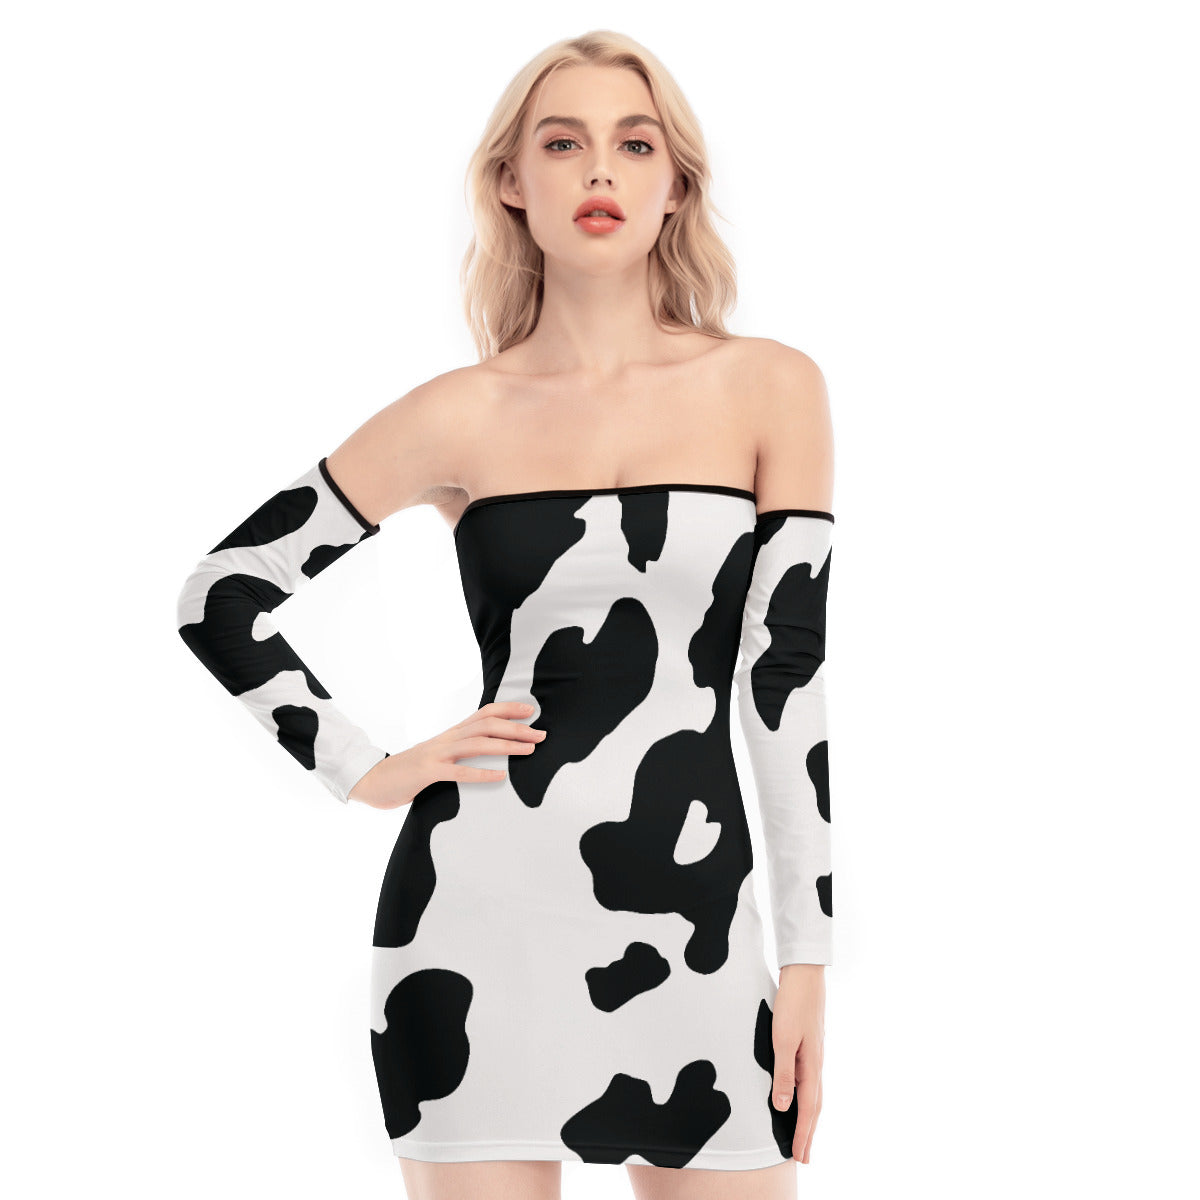 Cow Print Off-shoulder Lace-up Dress - Black